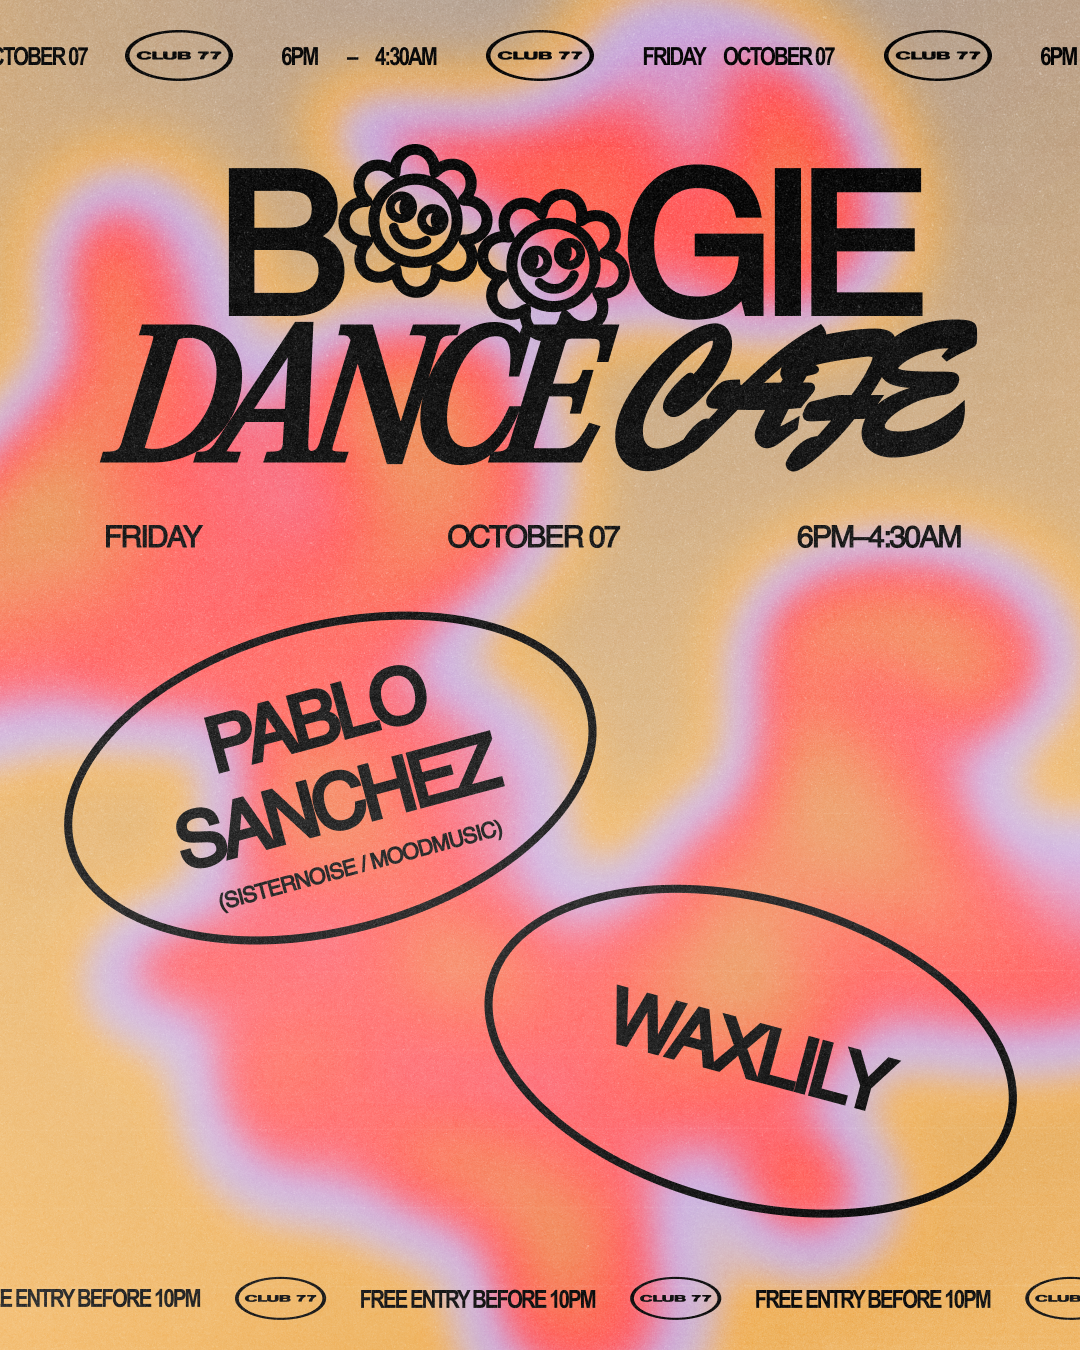 Boogie Dance Café with Pablo Sanchez (Sisternoise / Mooodmusic) & Waxlily - Página frontal